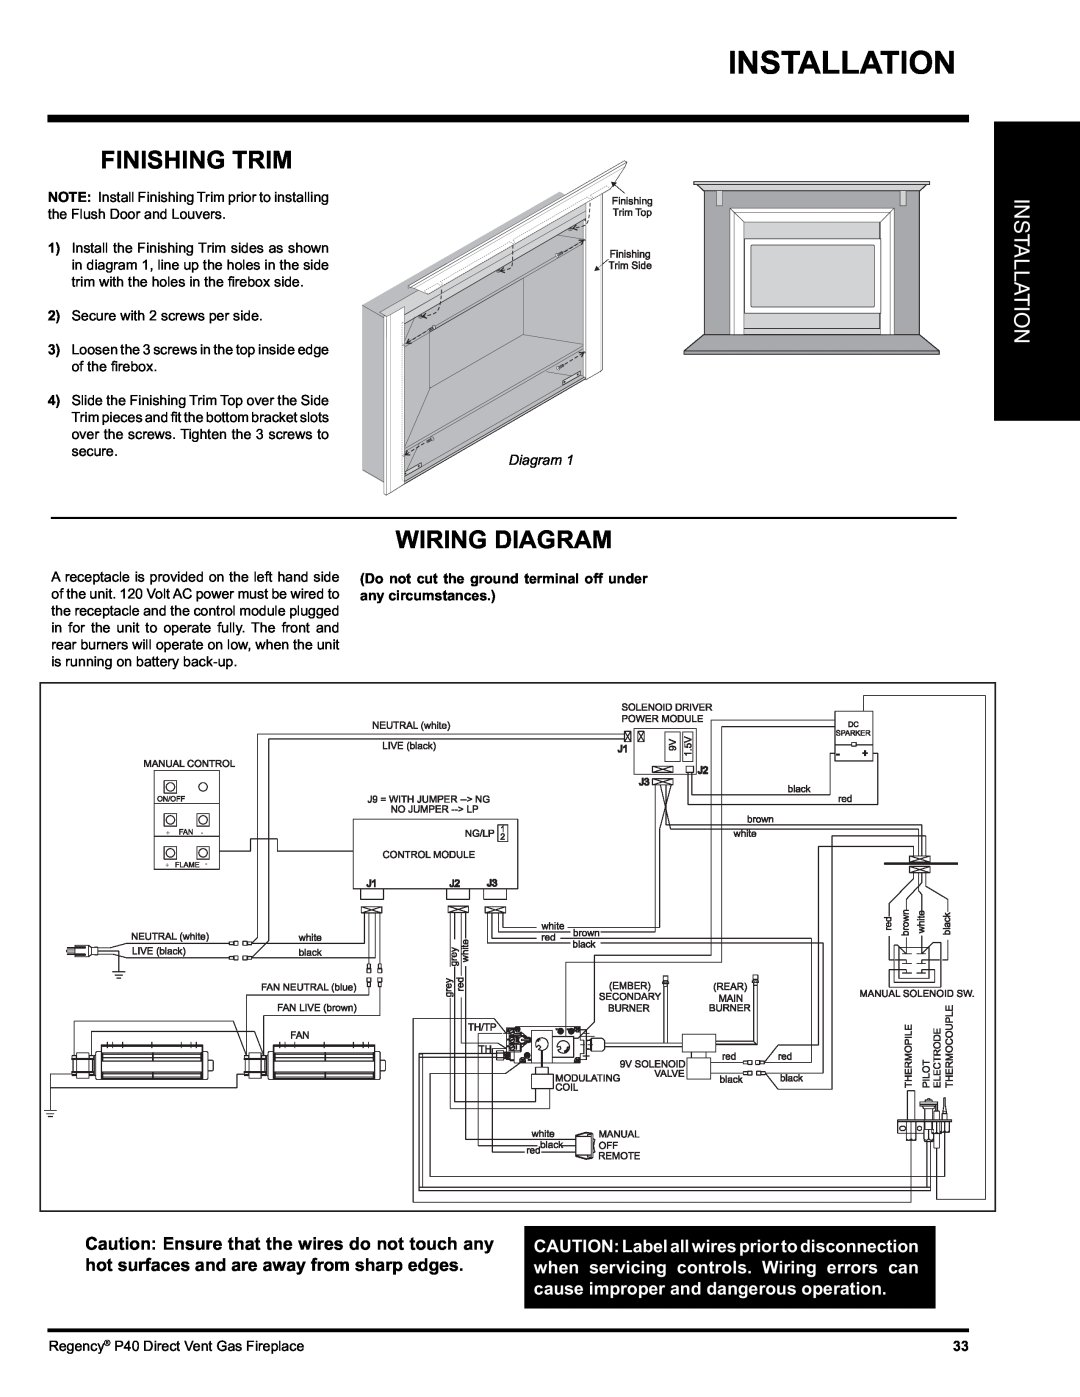 Regency P40-NG, P40-LP installation manual Finishing Trim, Wiring Diagram, Installation 